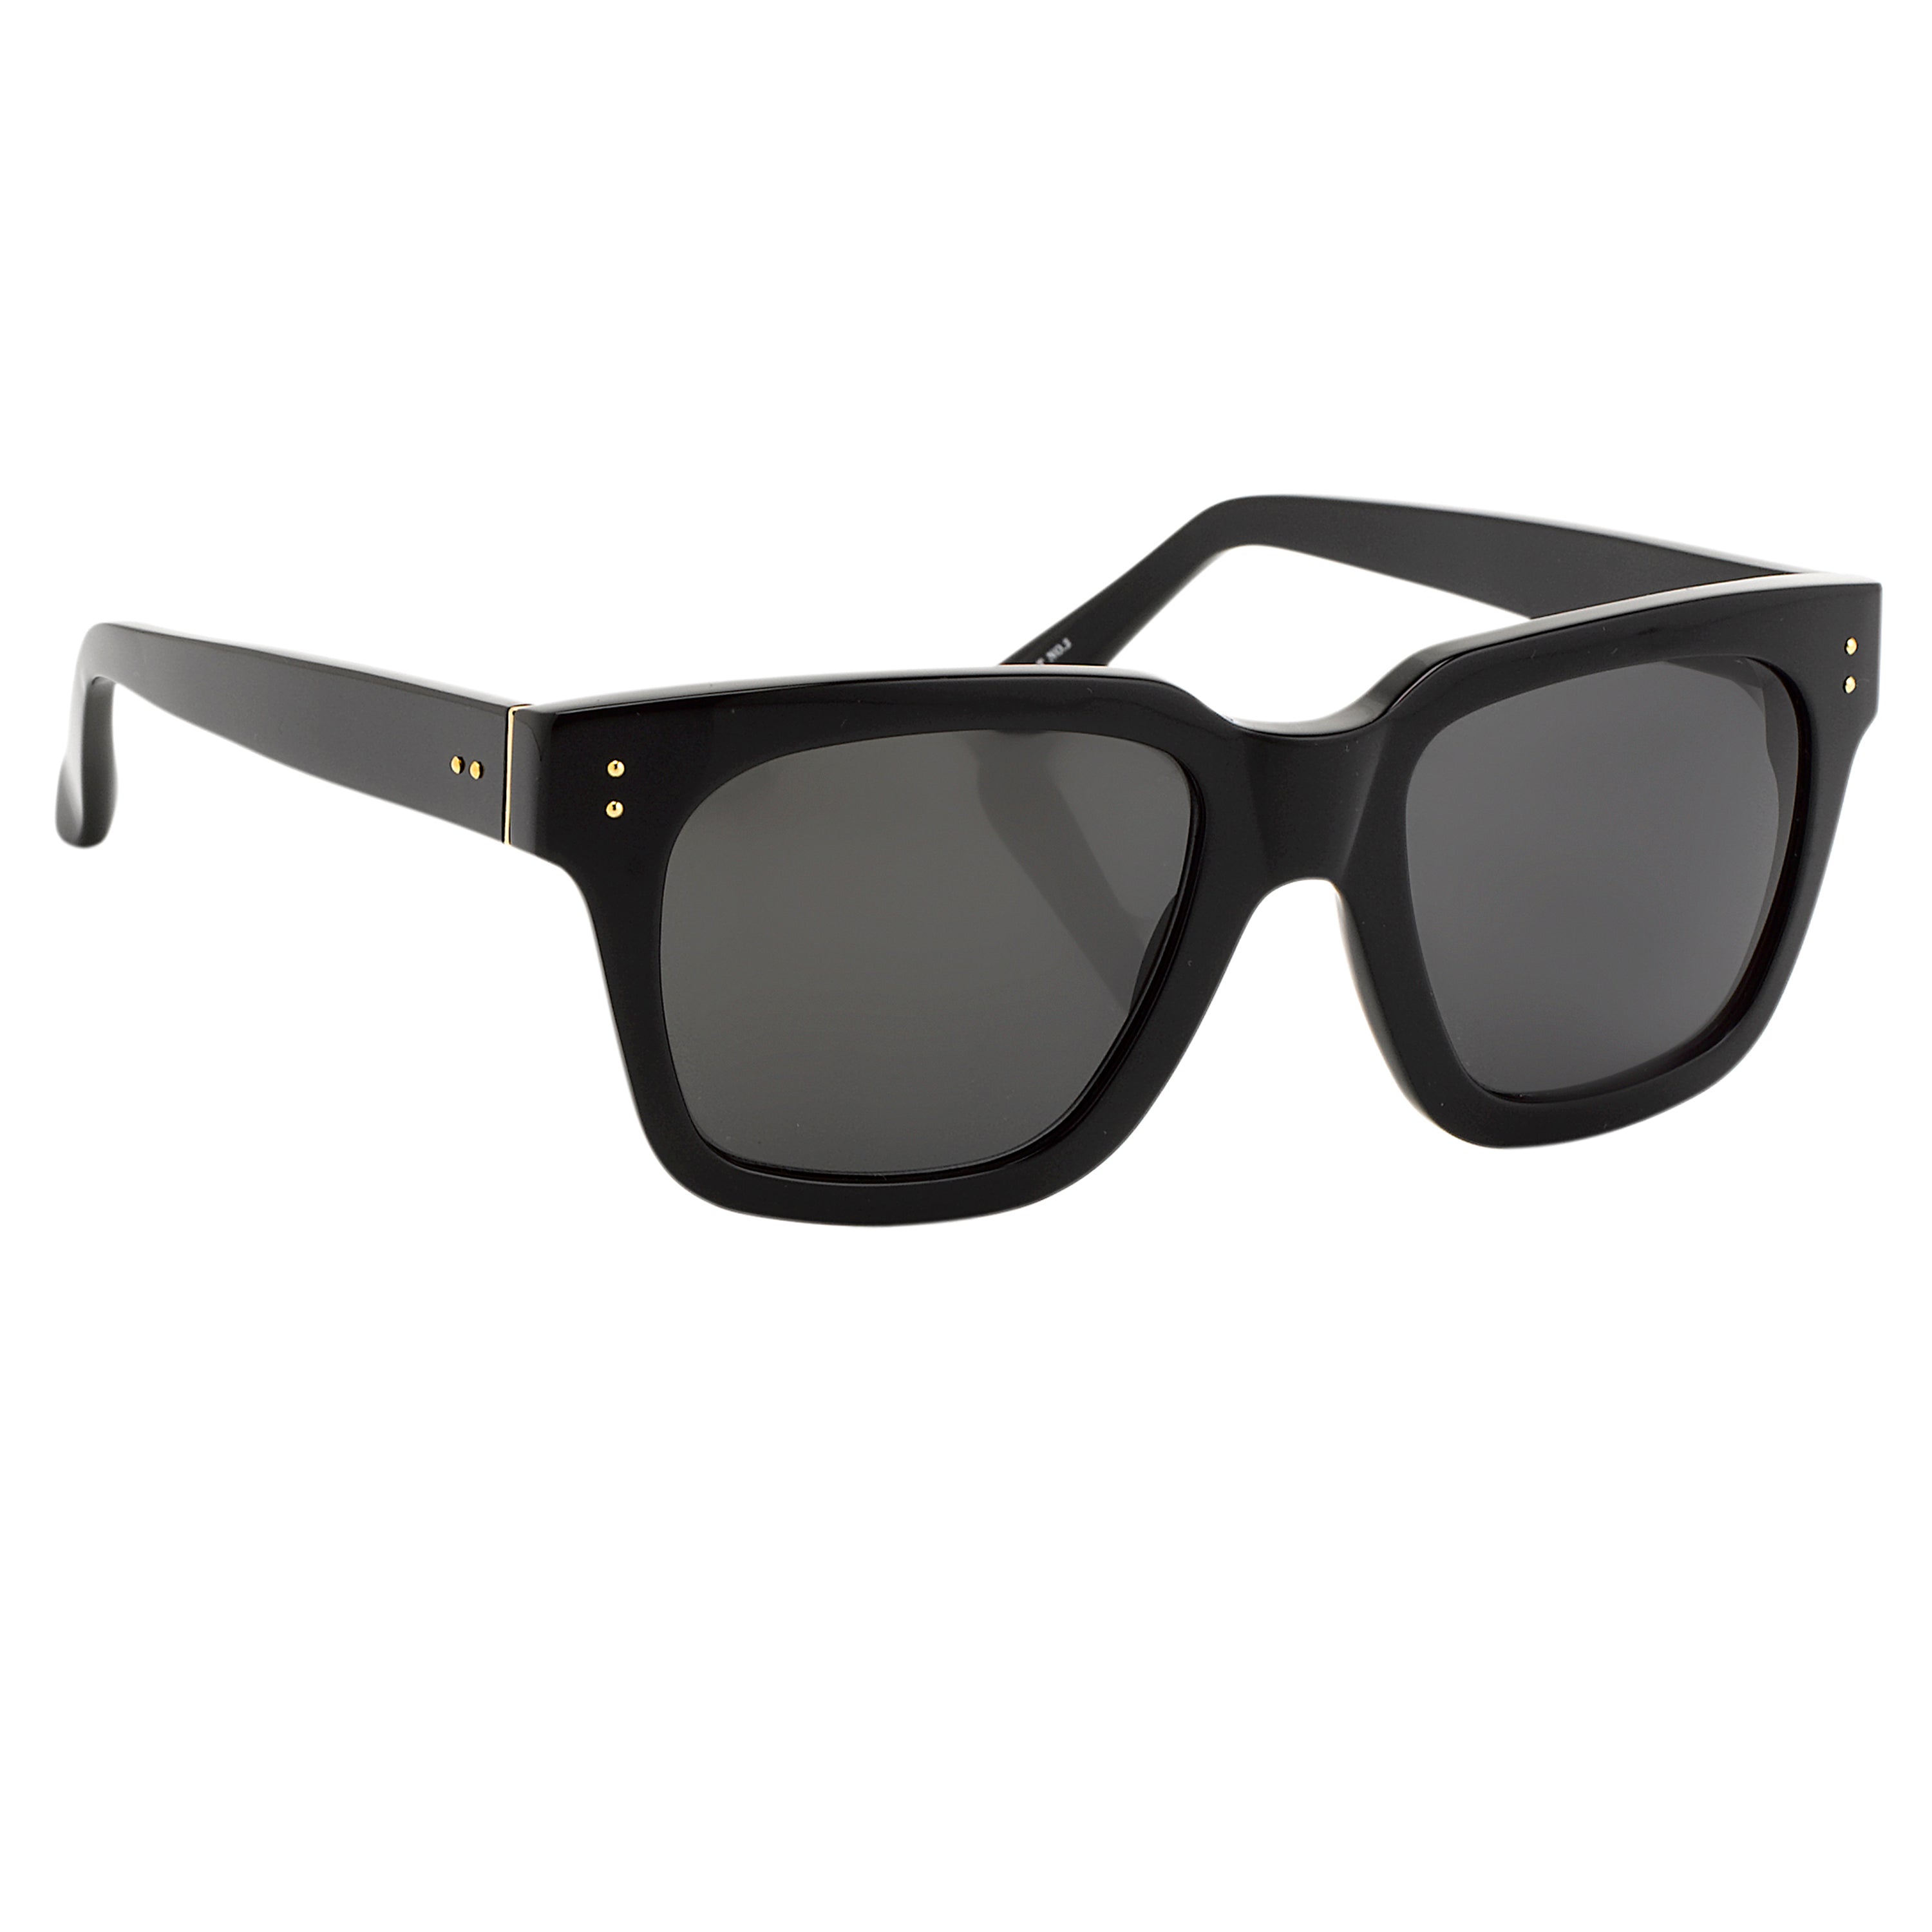 Desiree D-Frame Sunglasses in Black (Men's) by LINDA FARROW